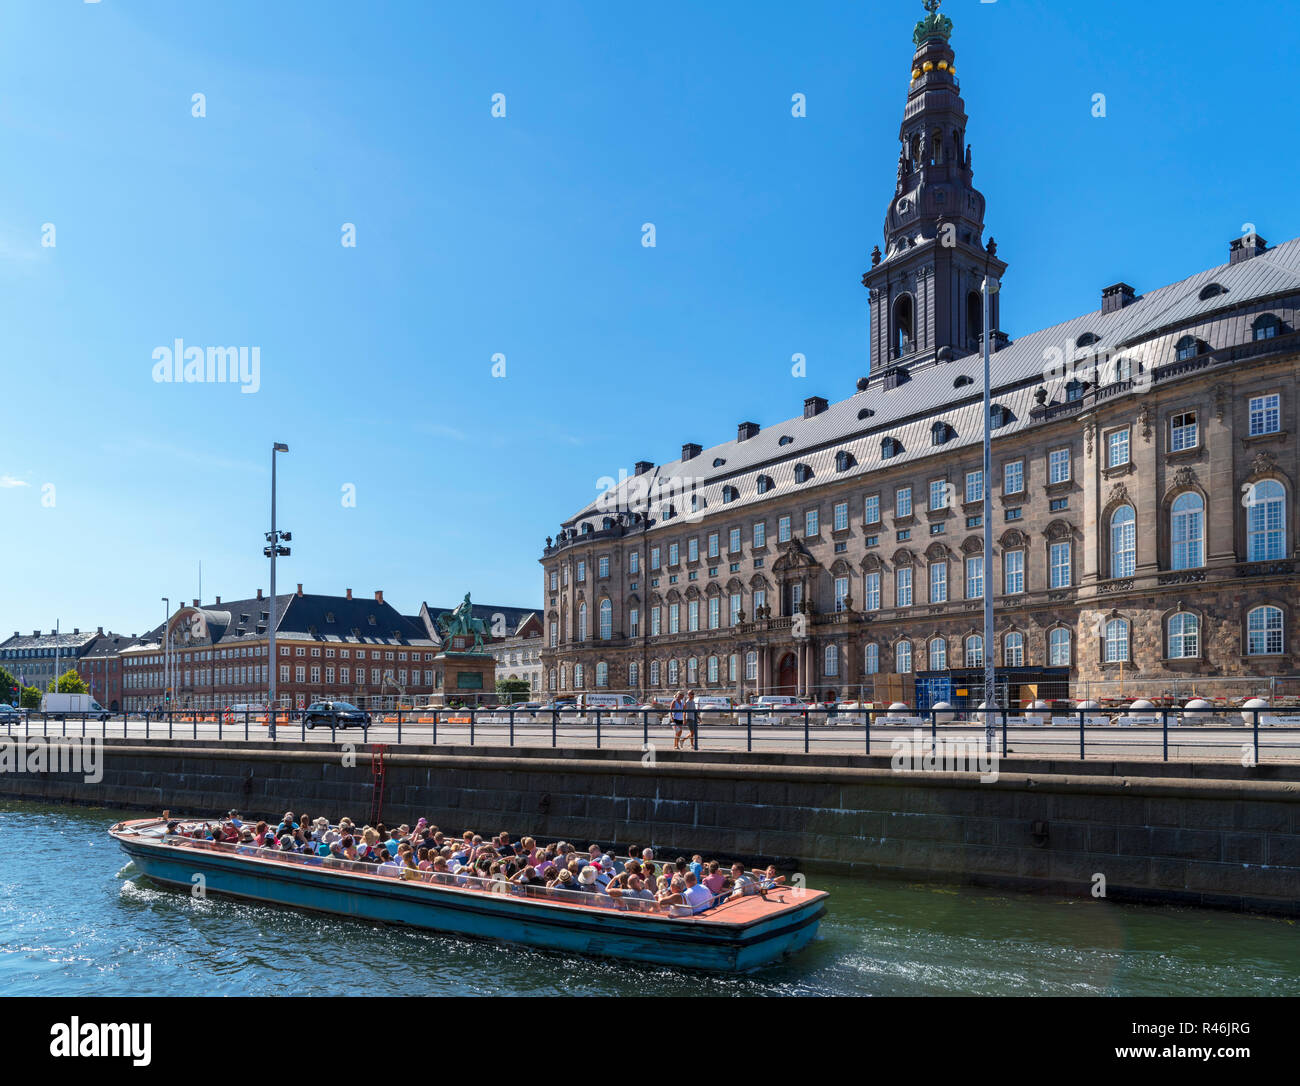 Crucero por el canal Slotholmens con ranura de Christiansborg (Christiansborg Palace), Copenhague, Dinamarca Foto de stock